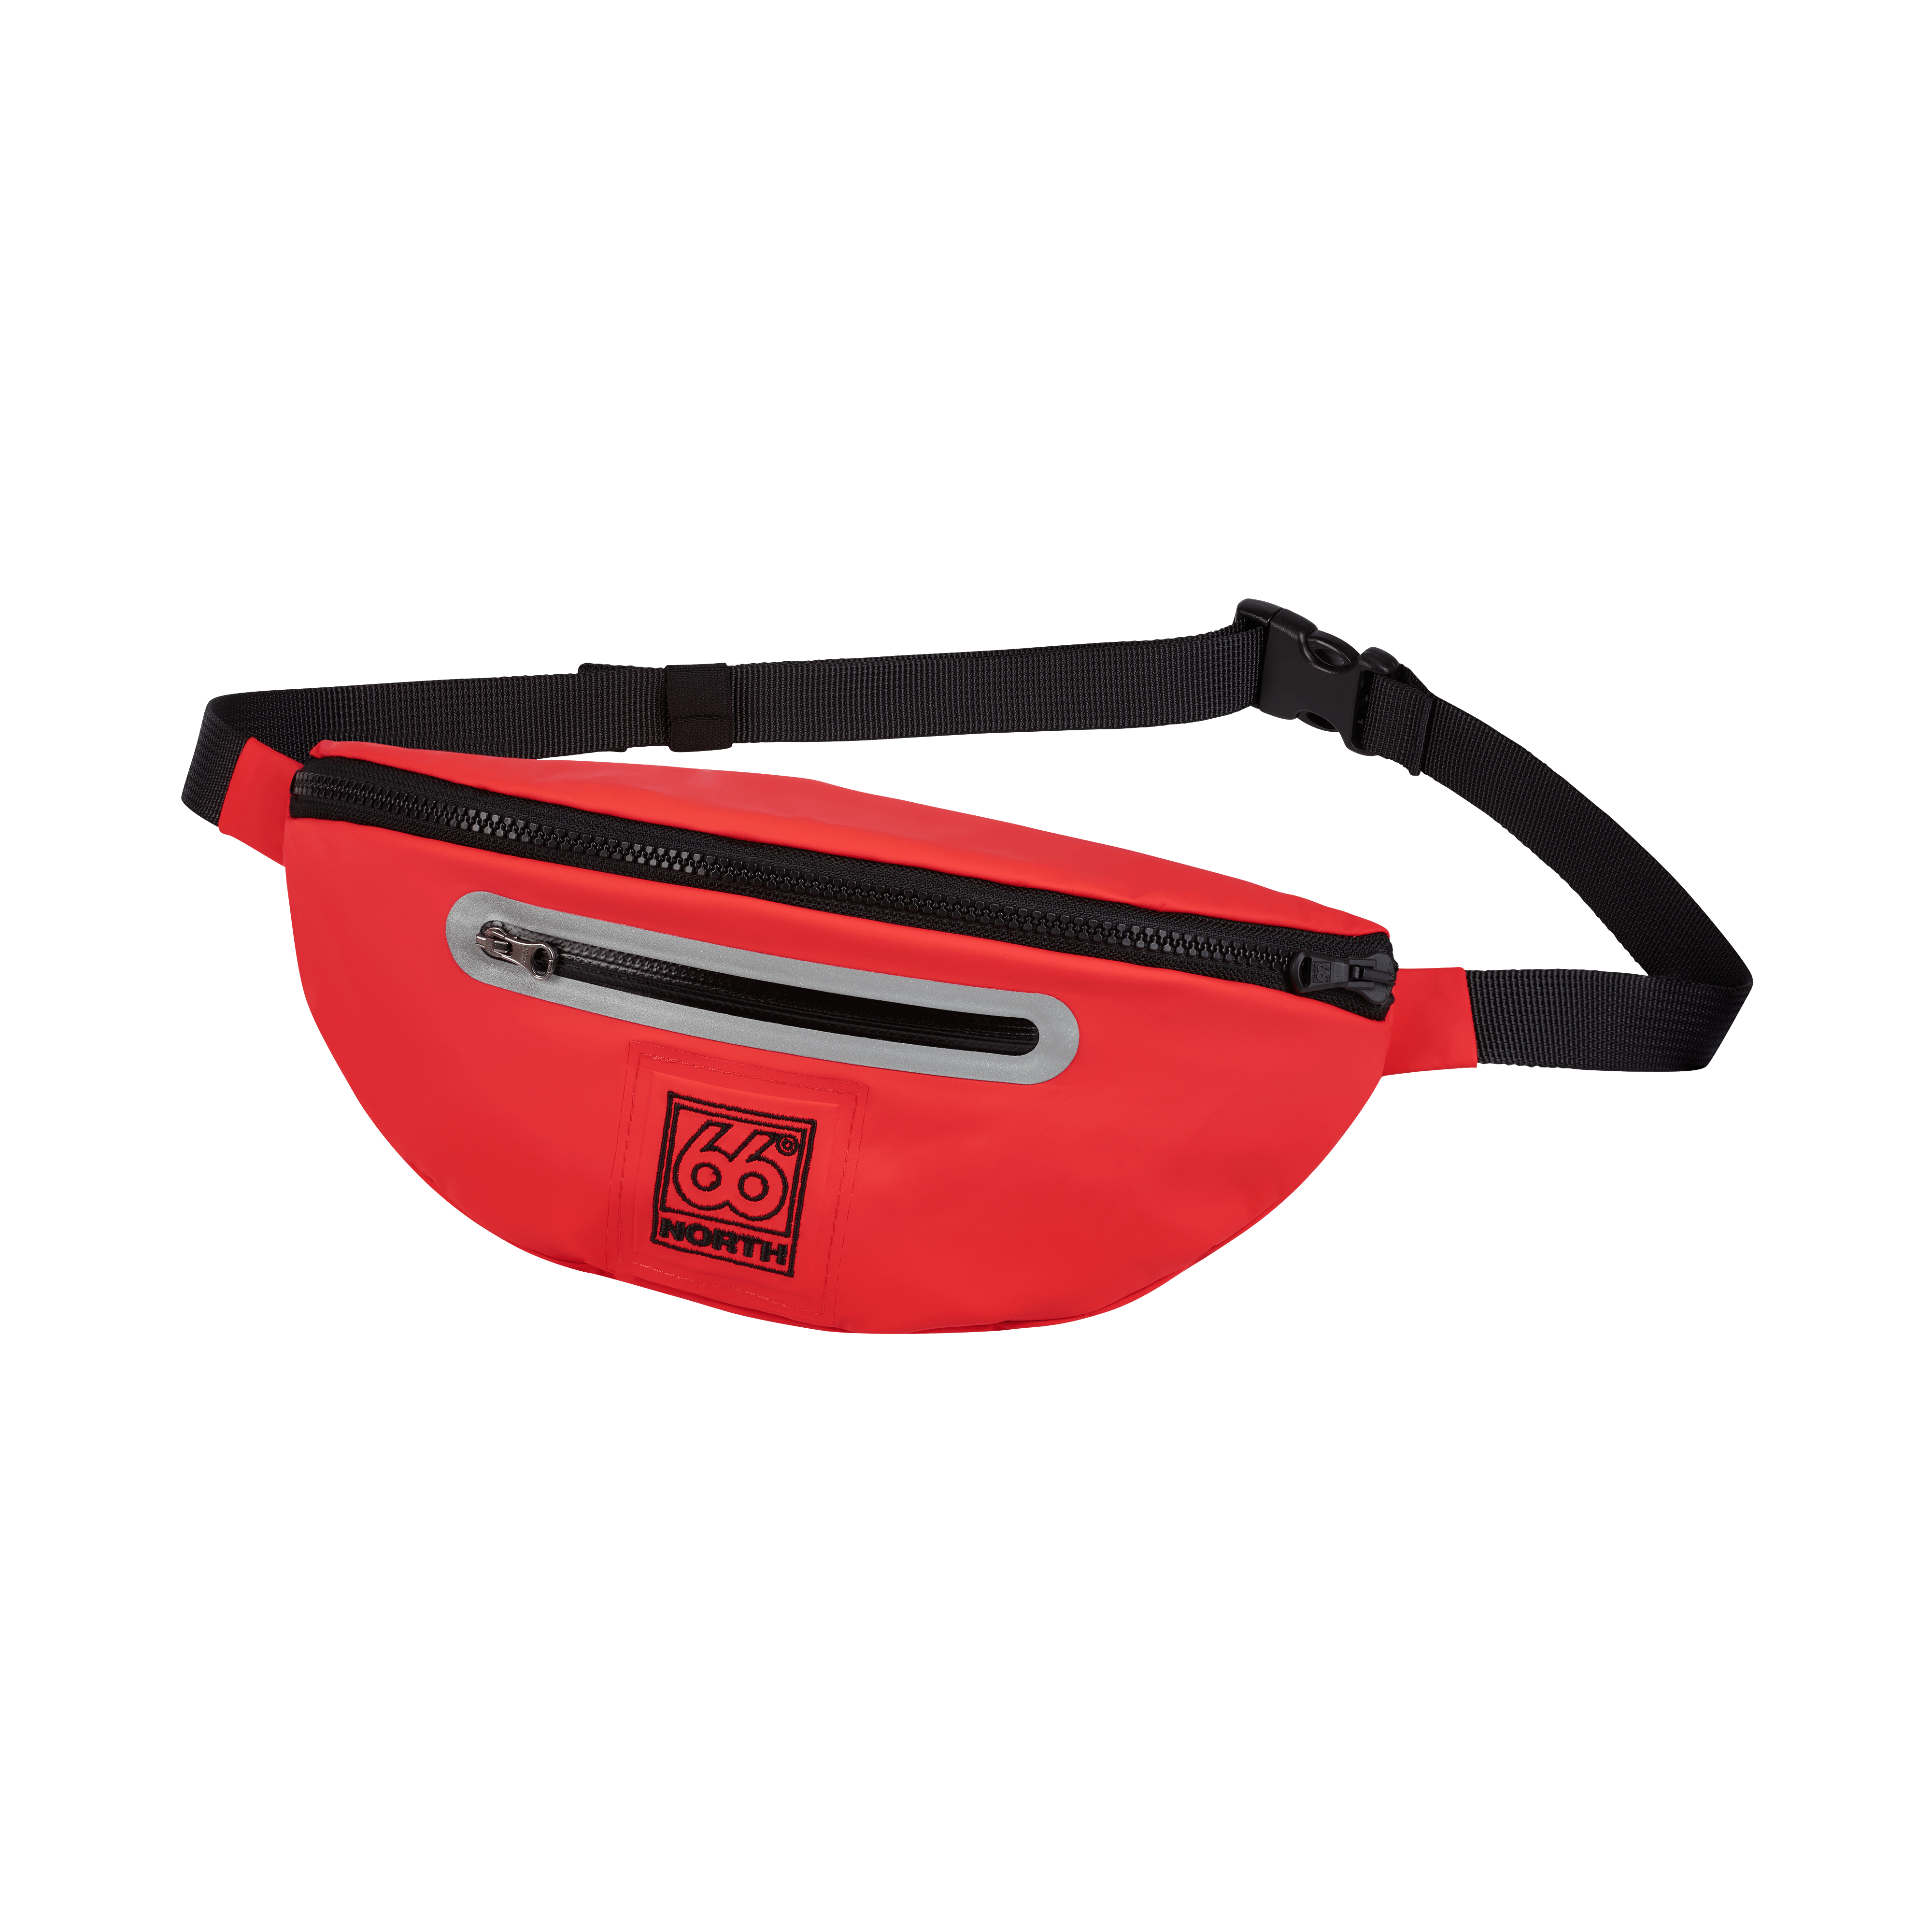 66 North Women's Bum Bag Accessories In Red 